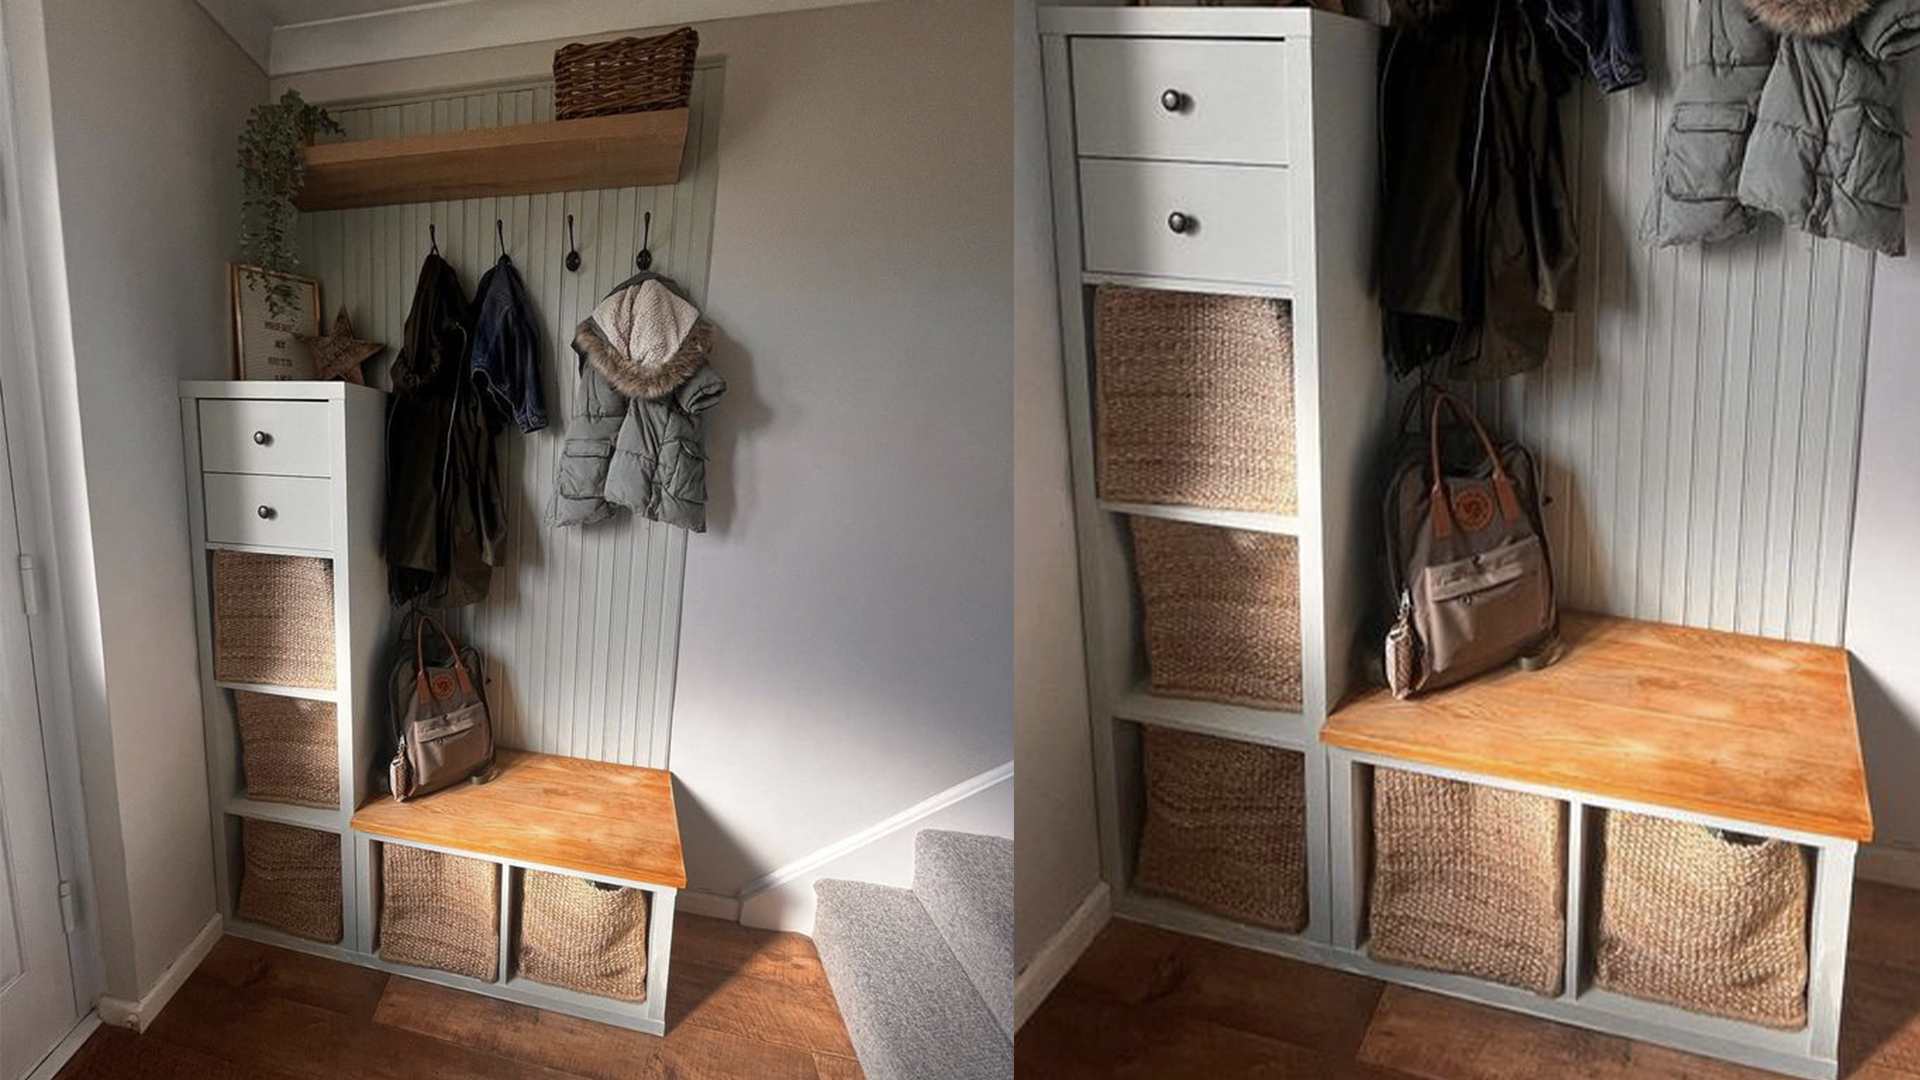 Backpack Organizer: A Brilliant Mudroom IKEA Hack! - Jessica Welling  Interiors